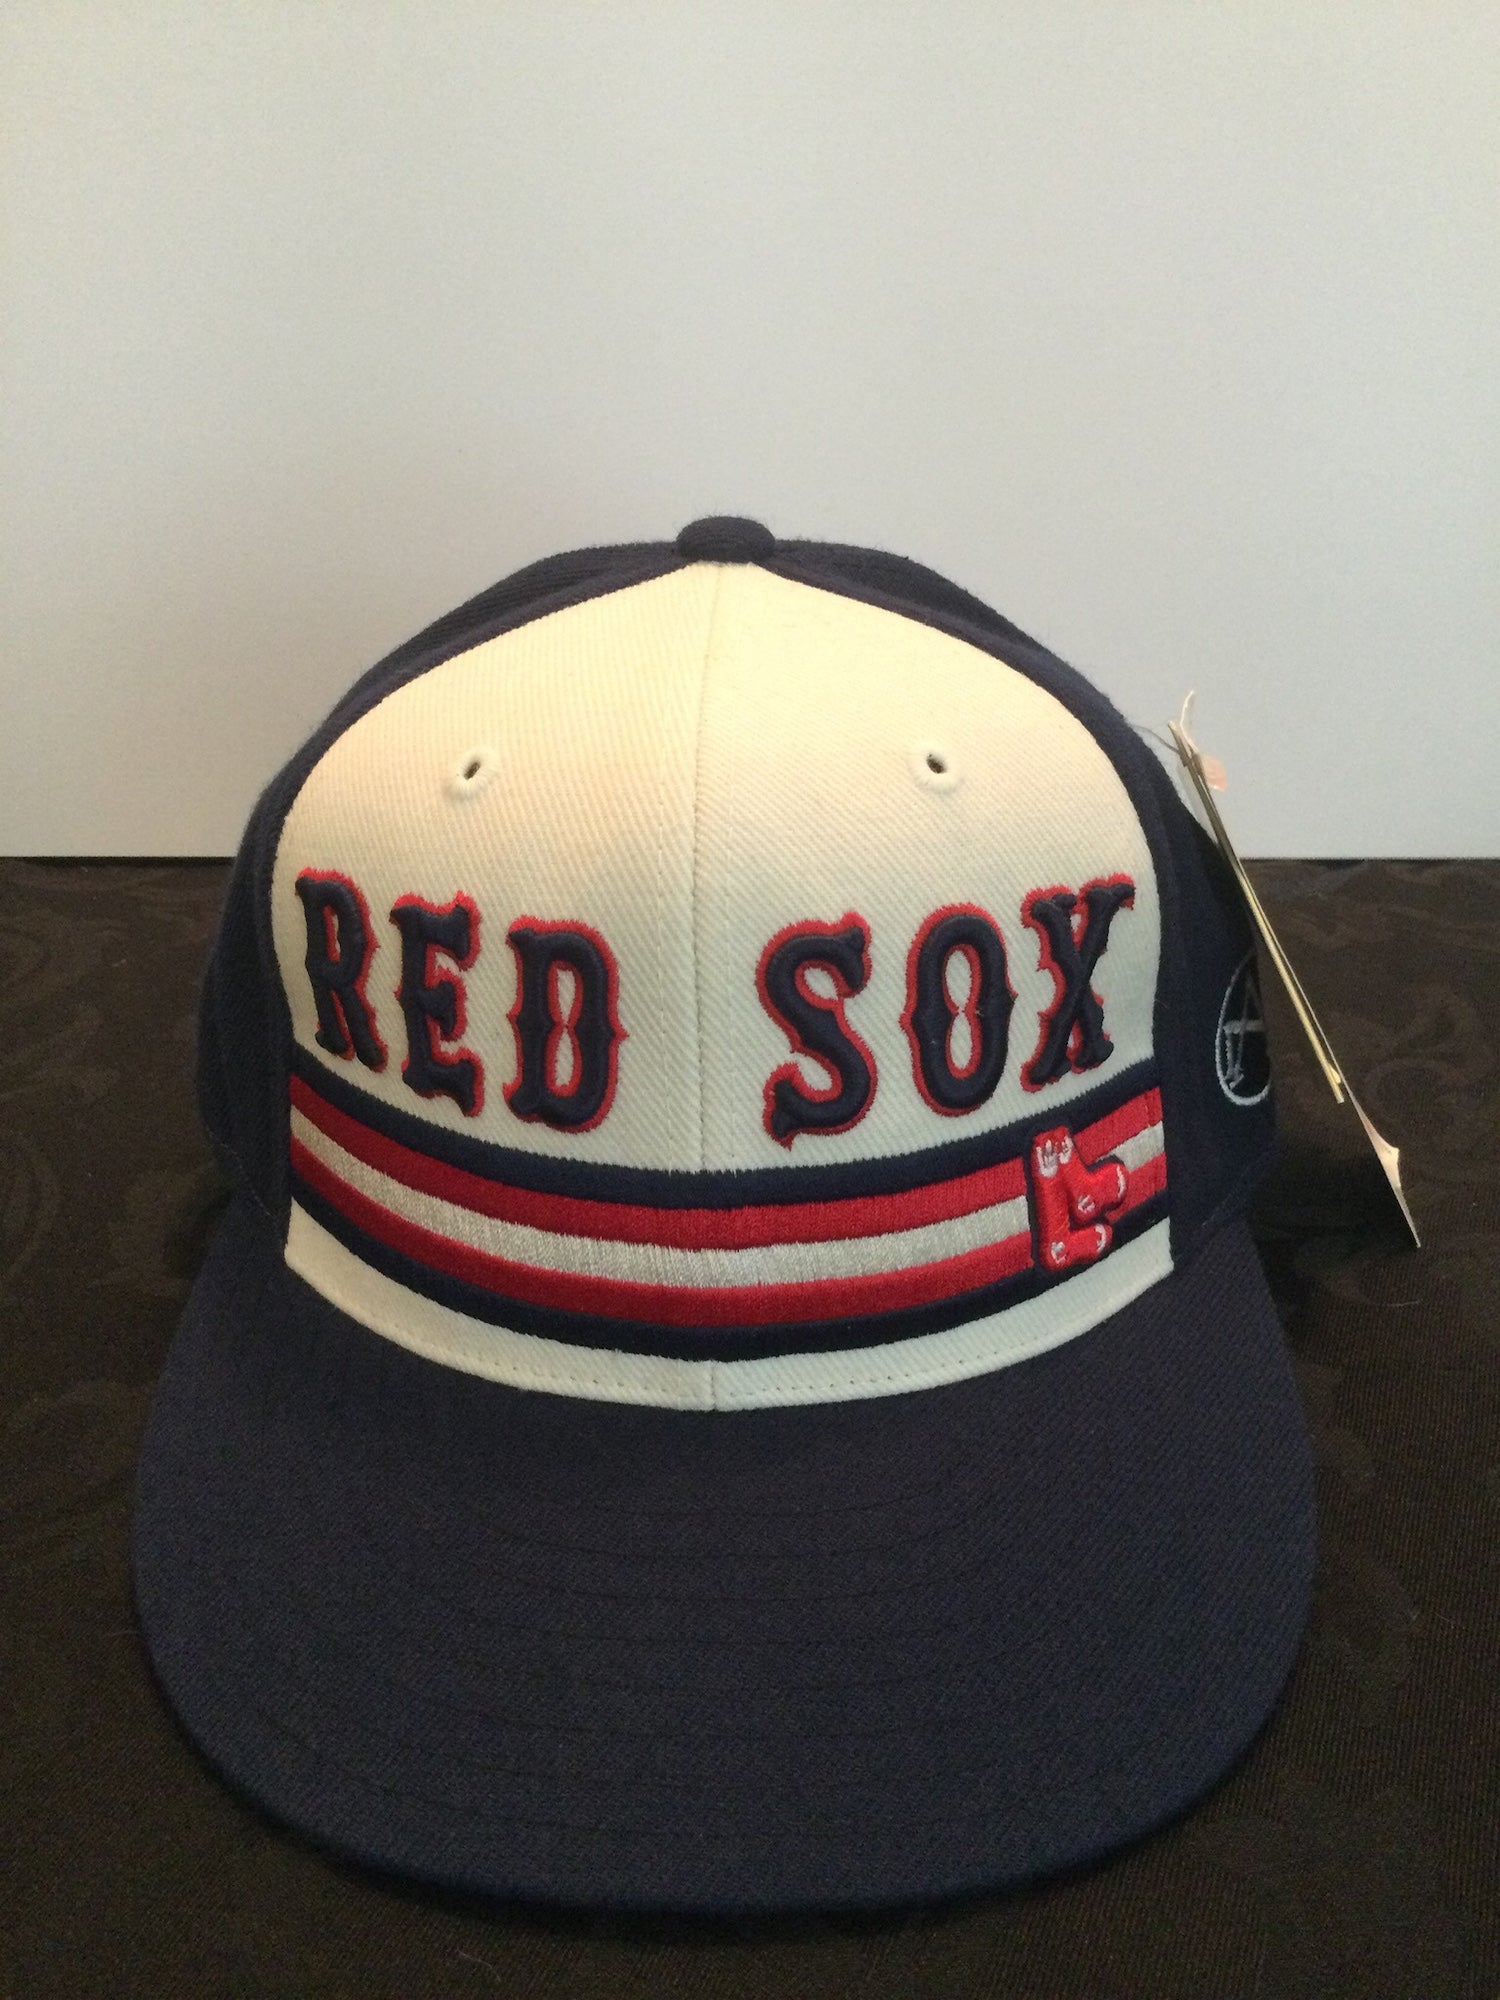 Men’s New Era Heritage Series Authentic 1931 Boston Red Sox Retro-Crown  59FIFTY Cap